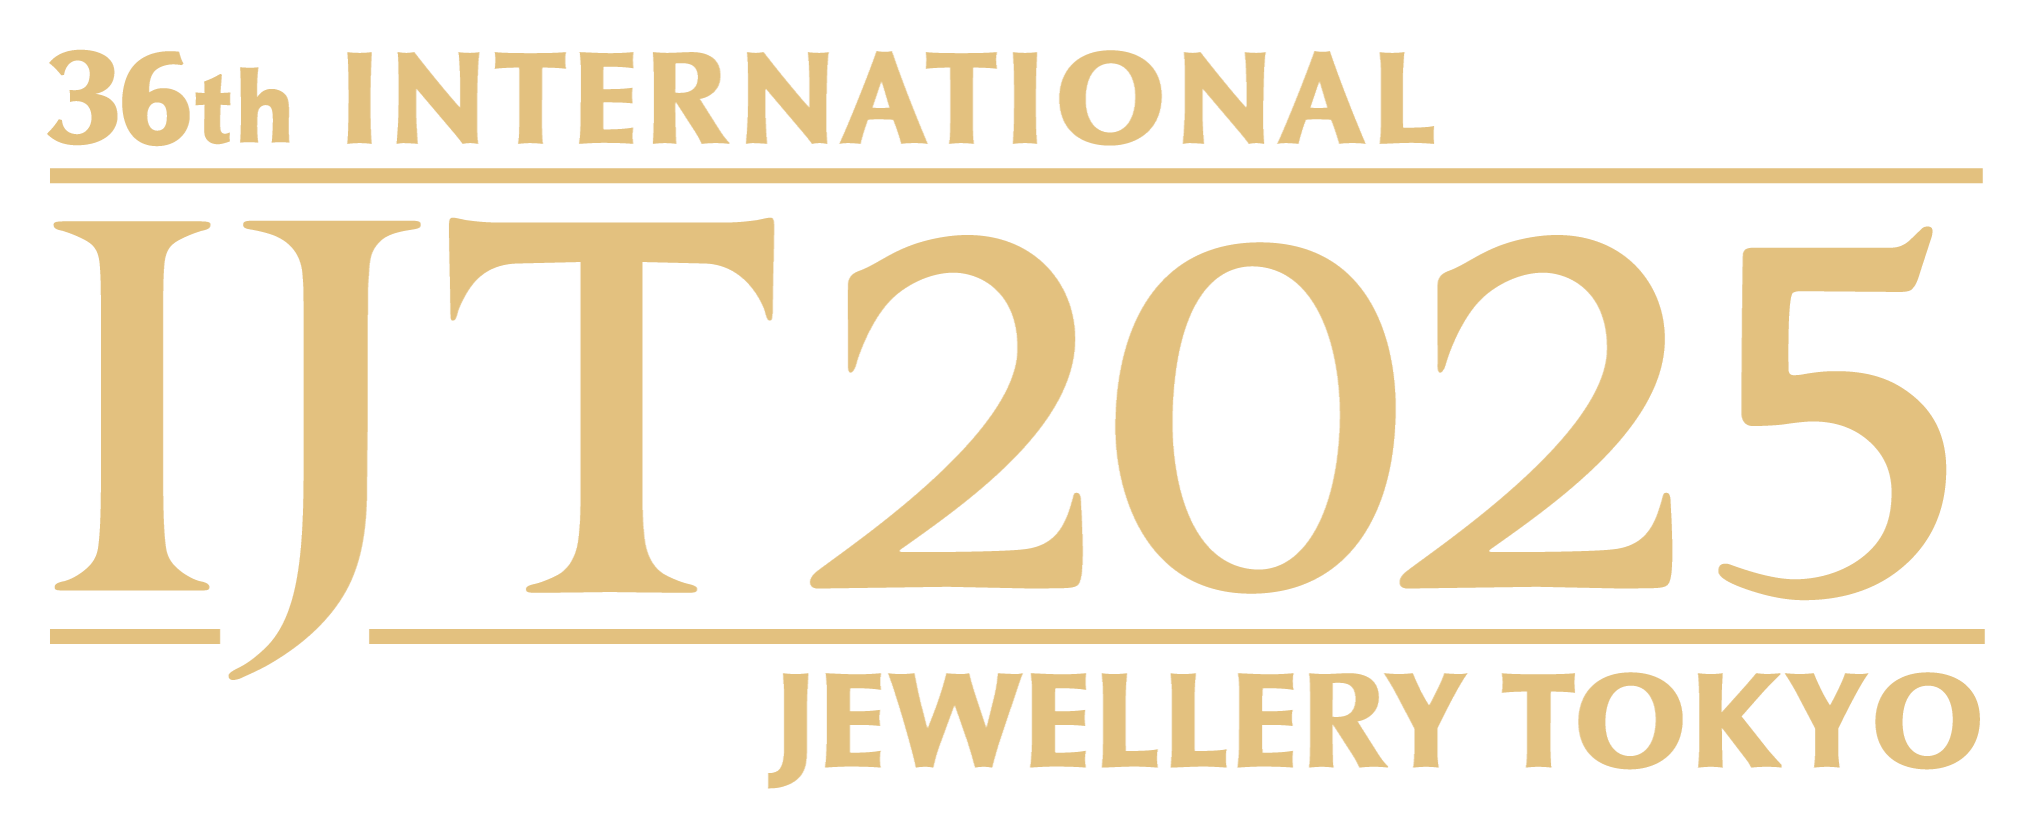 International jewellery tokyo